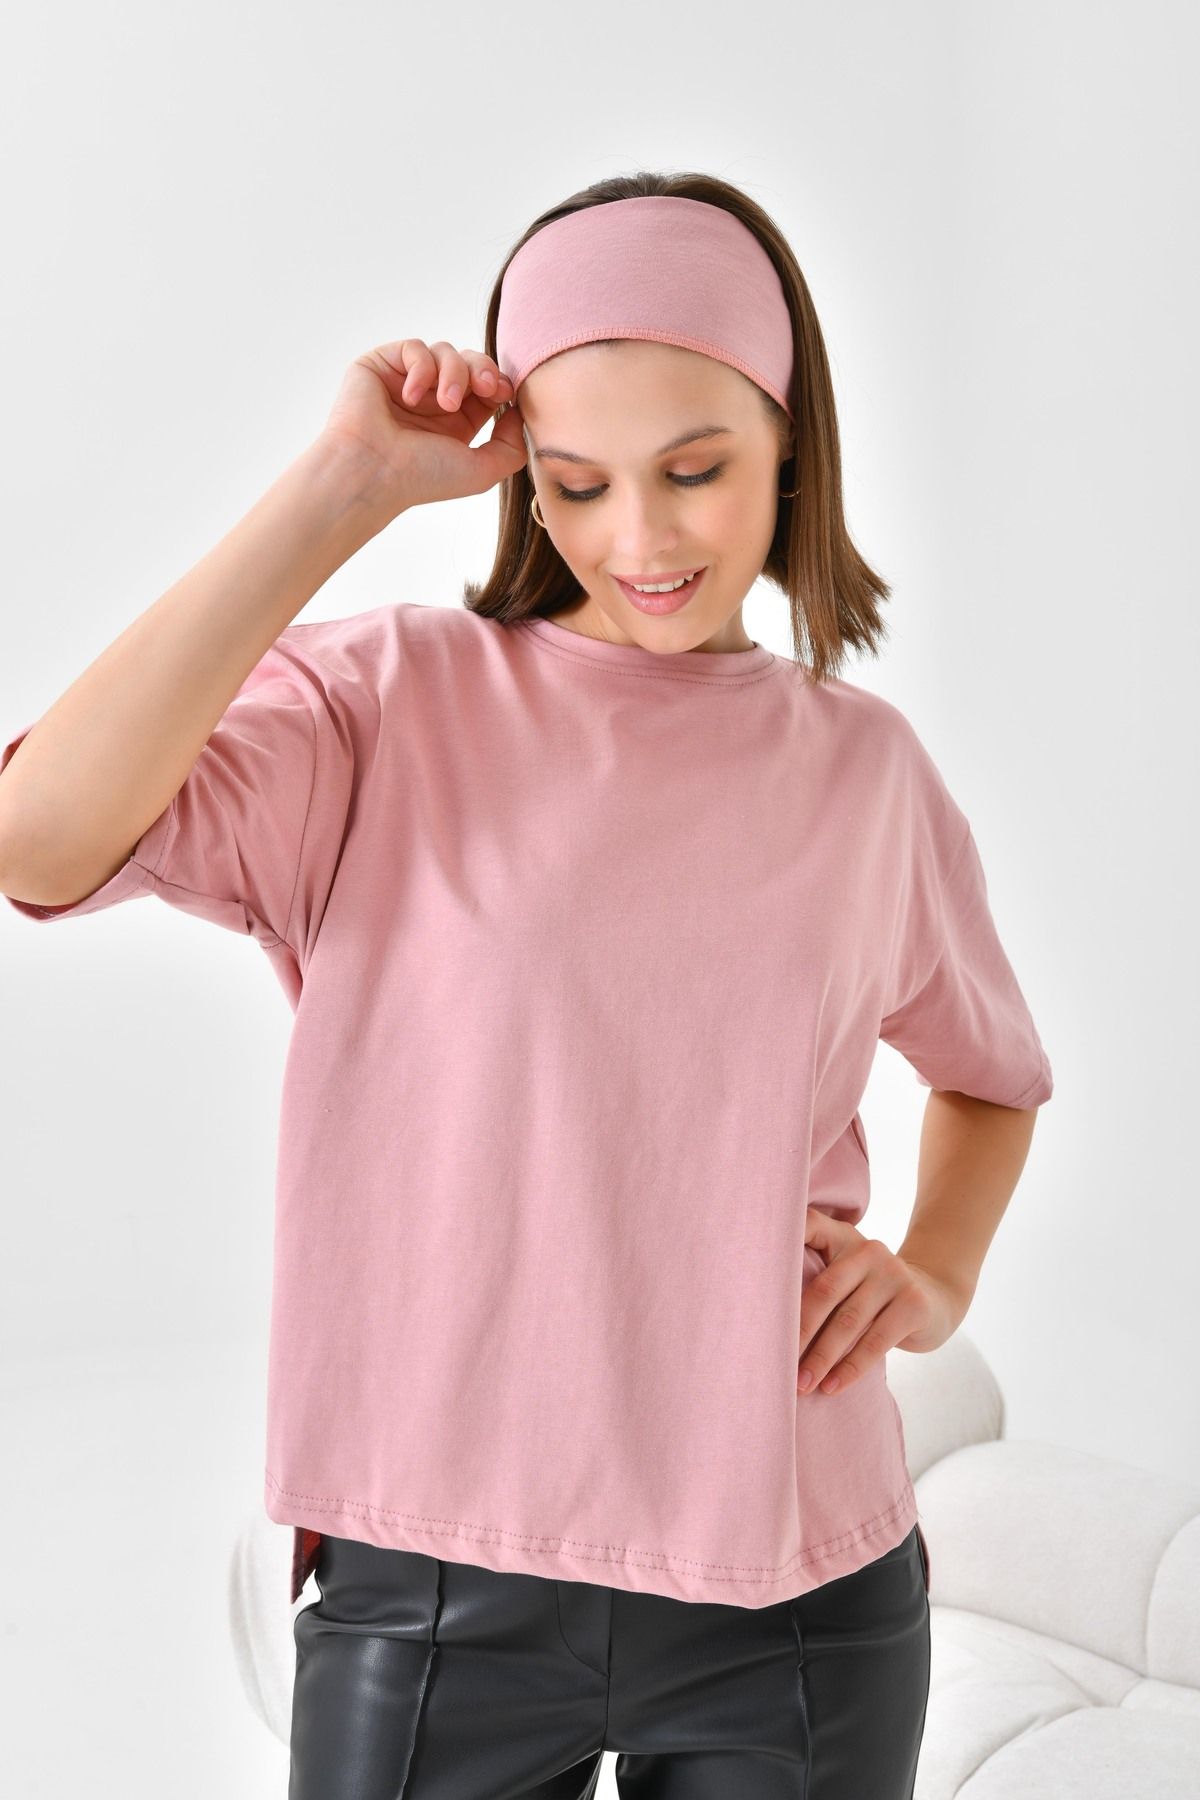 mirach %100 Pamuk Barbie Tişört Kısa Kollu Düz Model Kadın T-shirt Pamuklu Tişört Pudra (BANDANA HEDİYELİ)